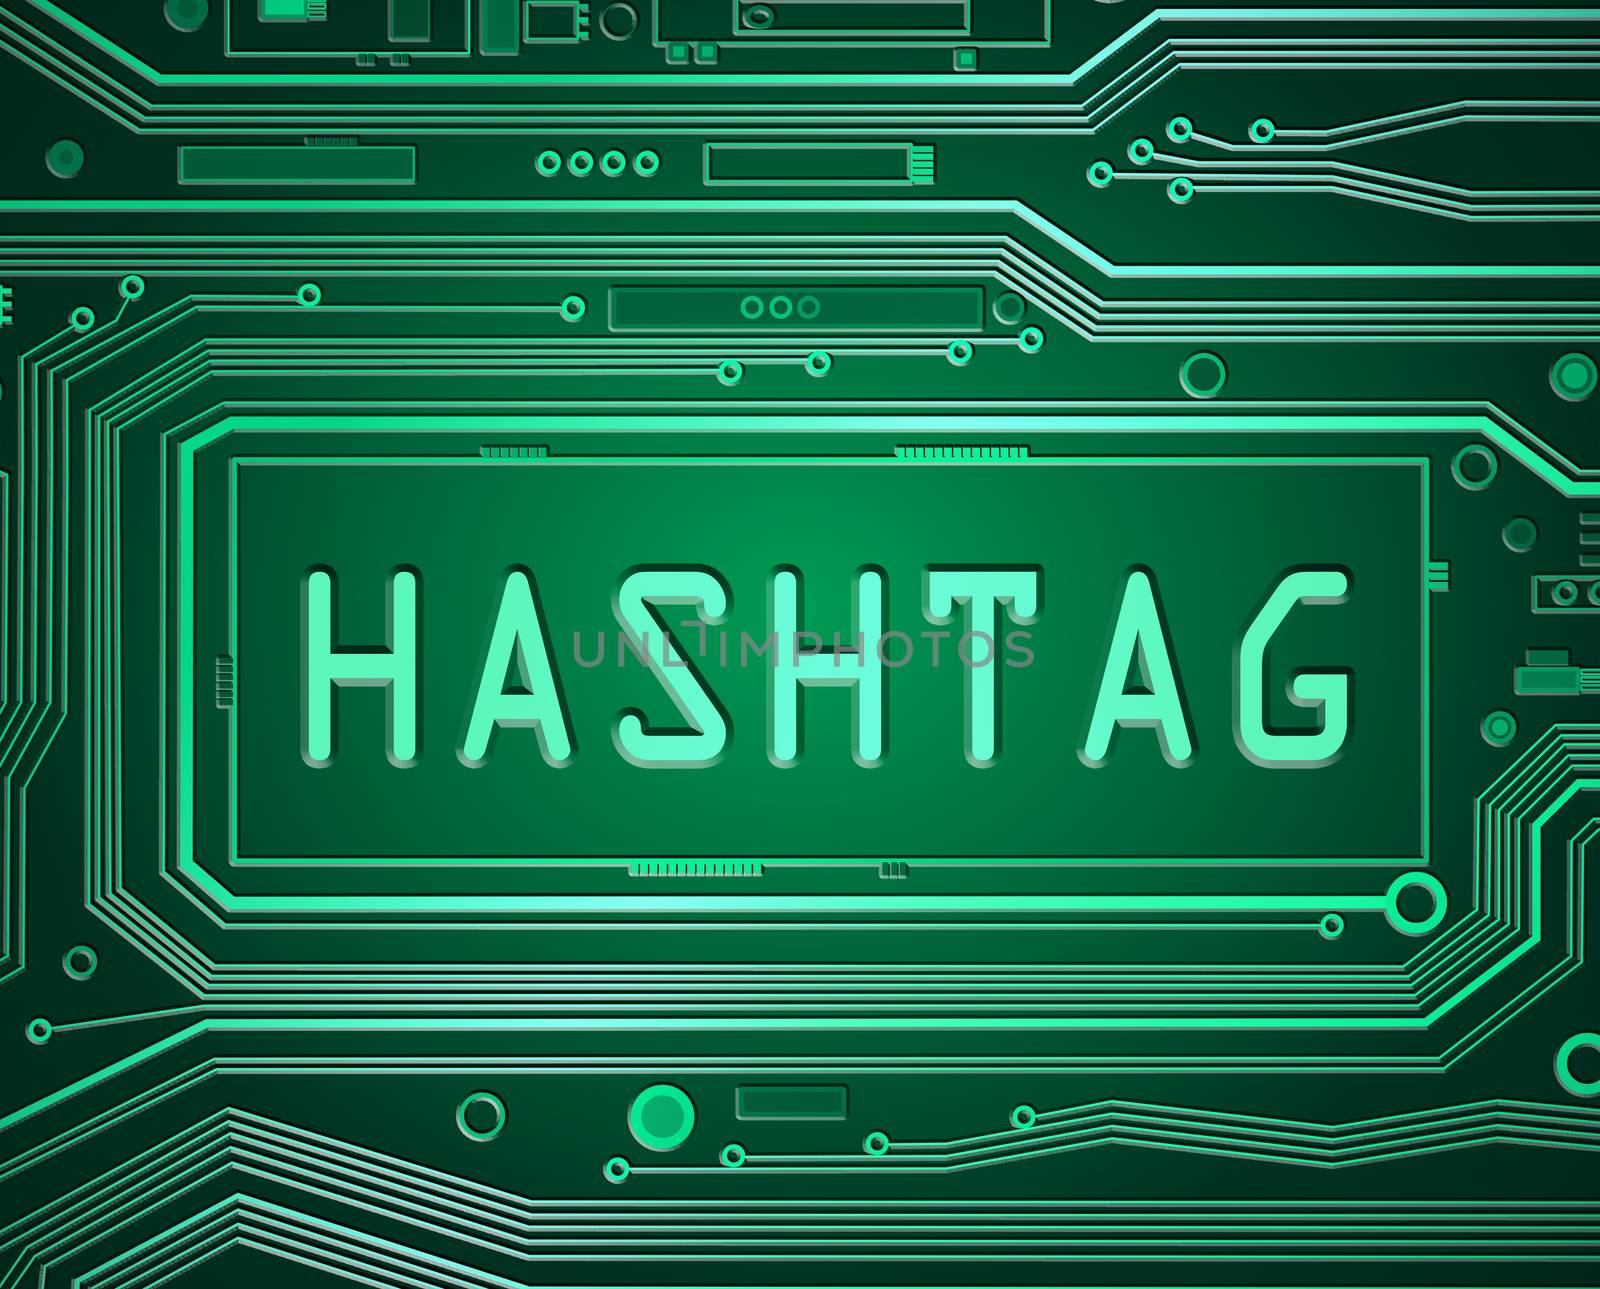 Hashtag concept. by 72soul